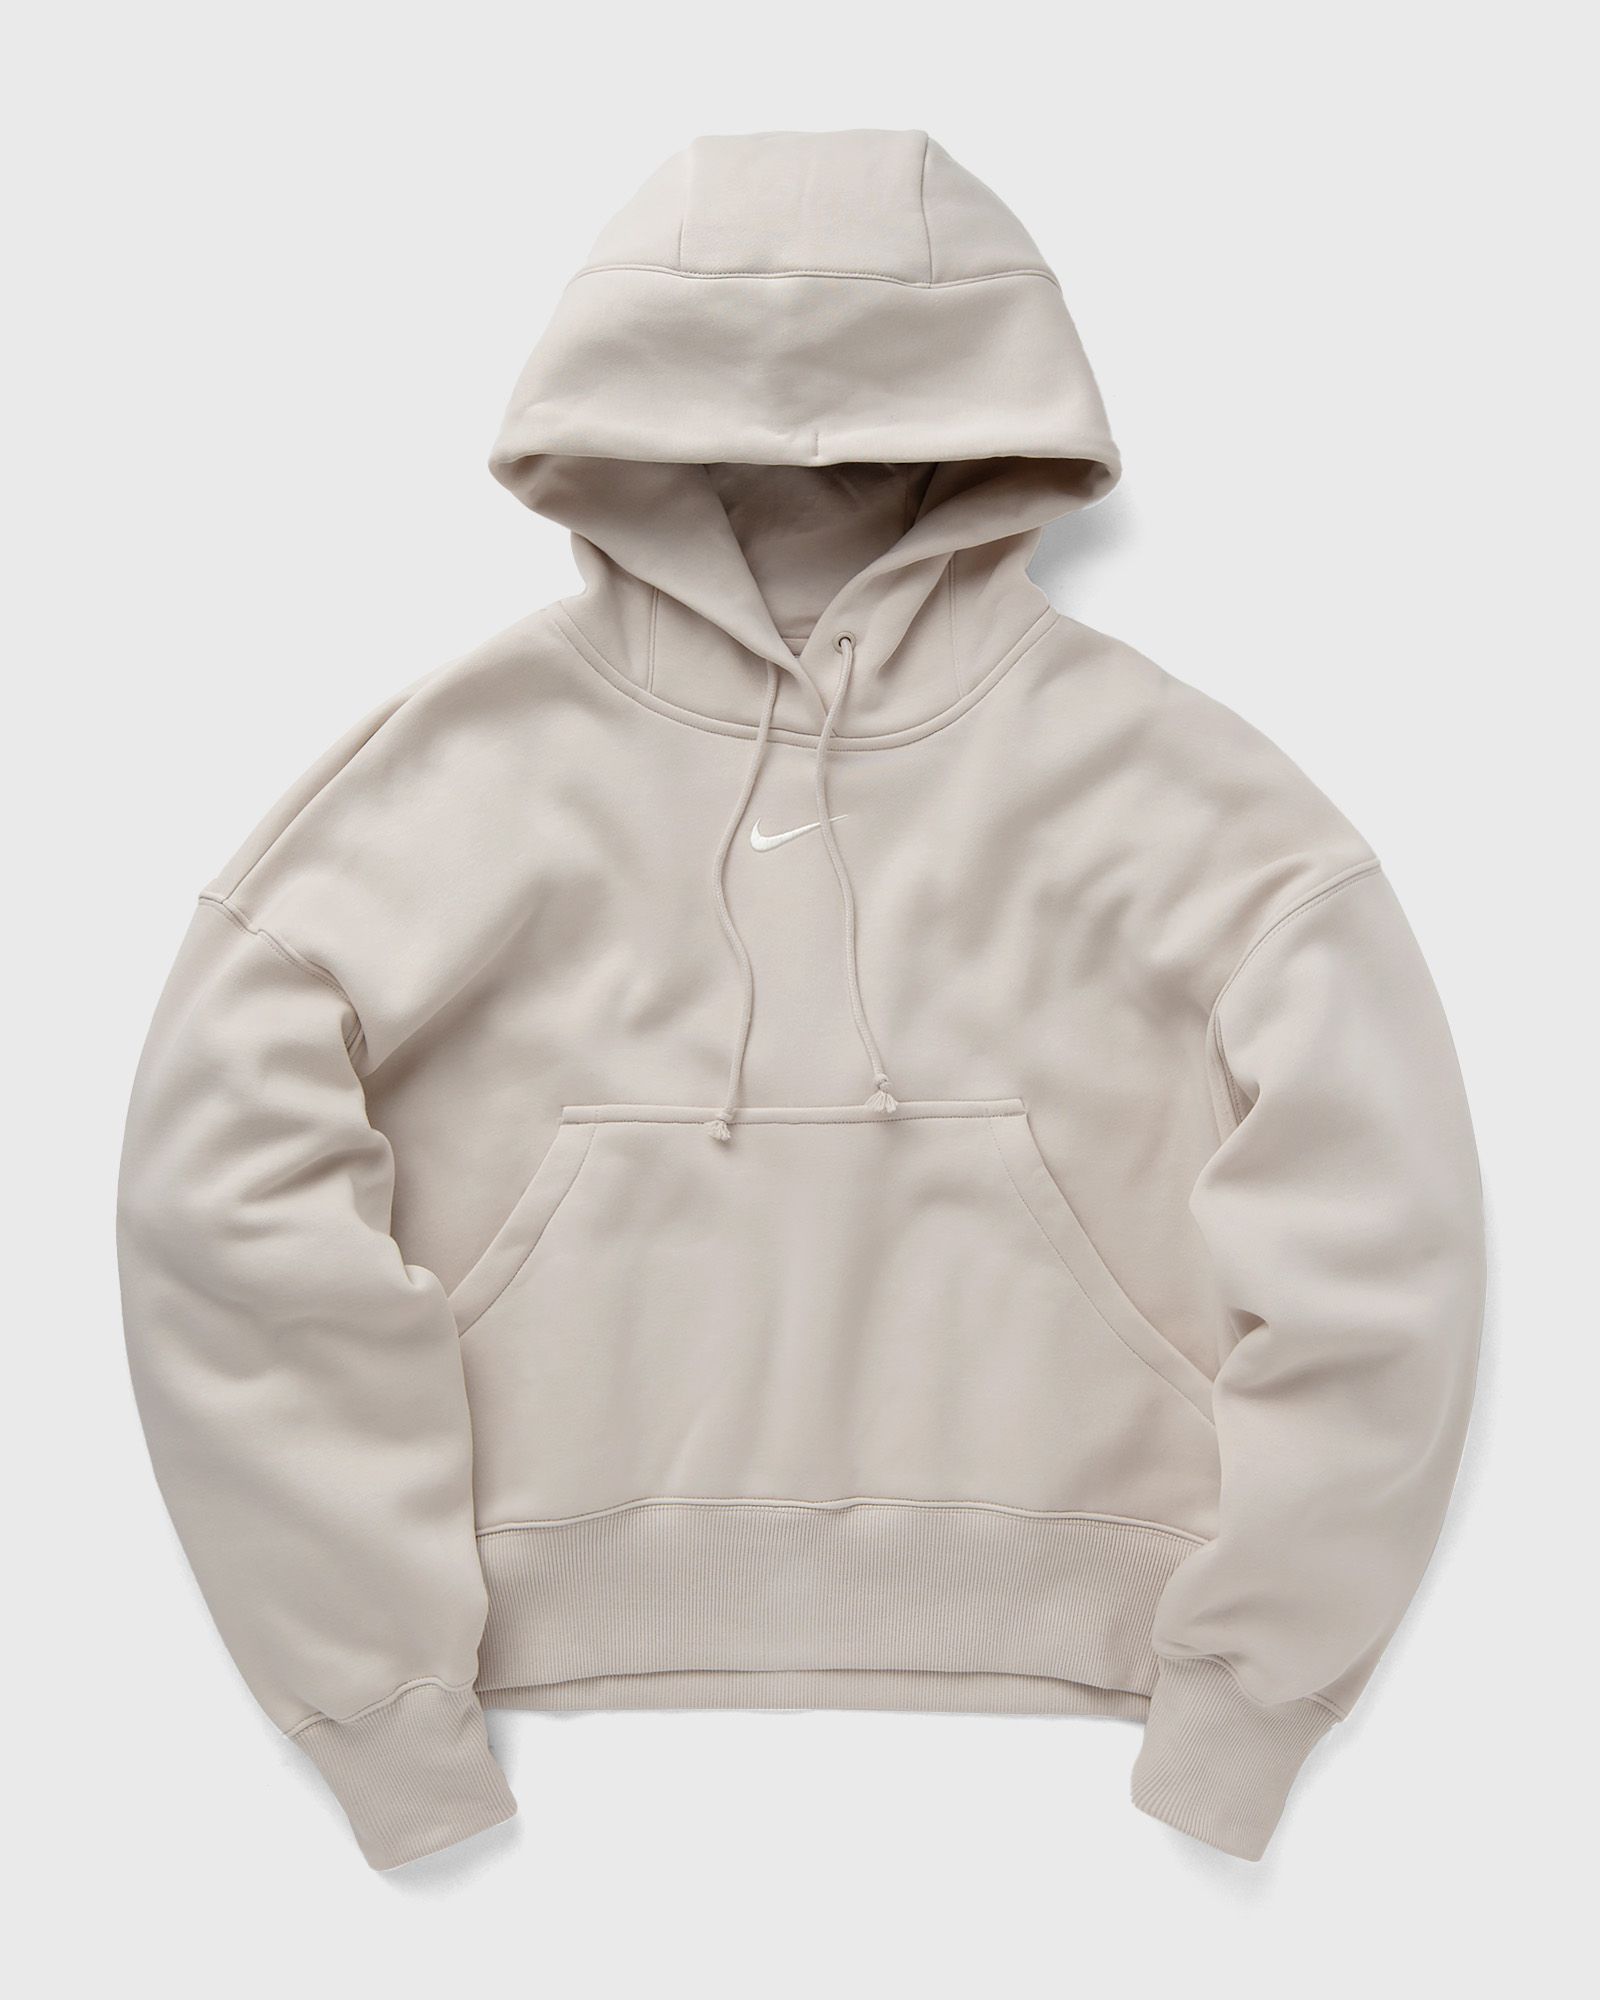 Nike - wmns phoenix fleece over-oversized pullover hoodie women hoodies white in größe:s